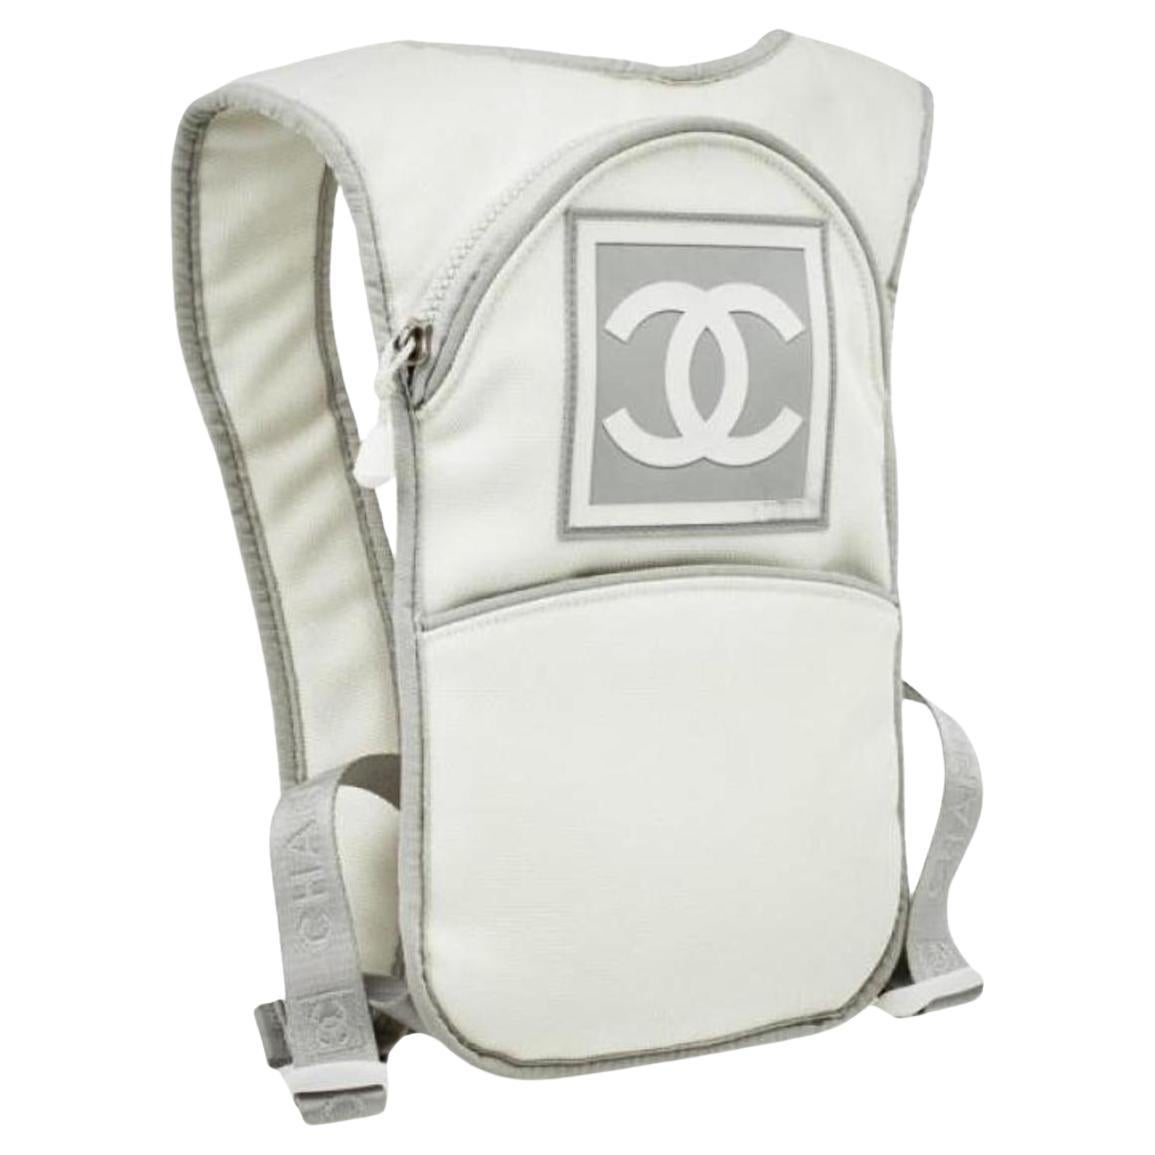 Chanel Vintage White Nylon Sport Backpack Rare Unisex

2003 {VINTAGE 21 Years}

Adjustable shoulder straps
Interlocking CC Rubber Logo
11.8